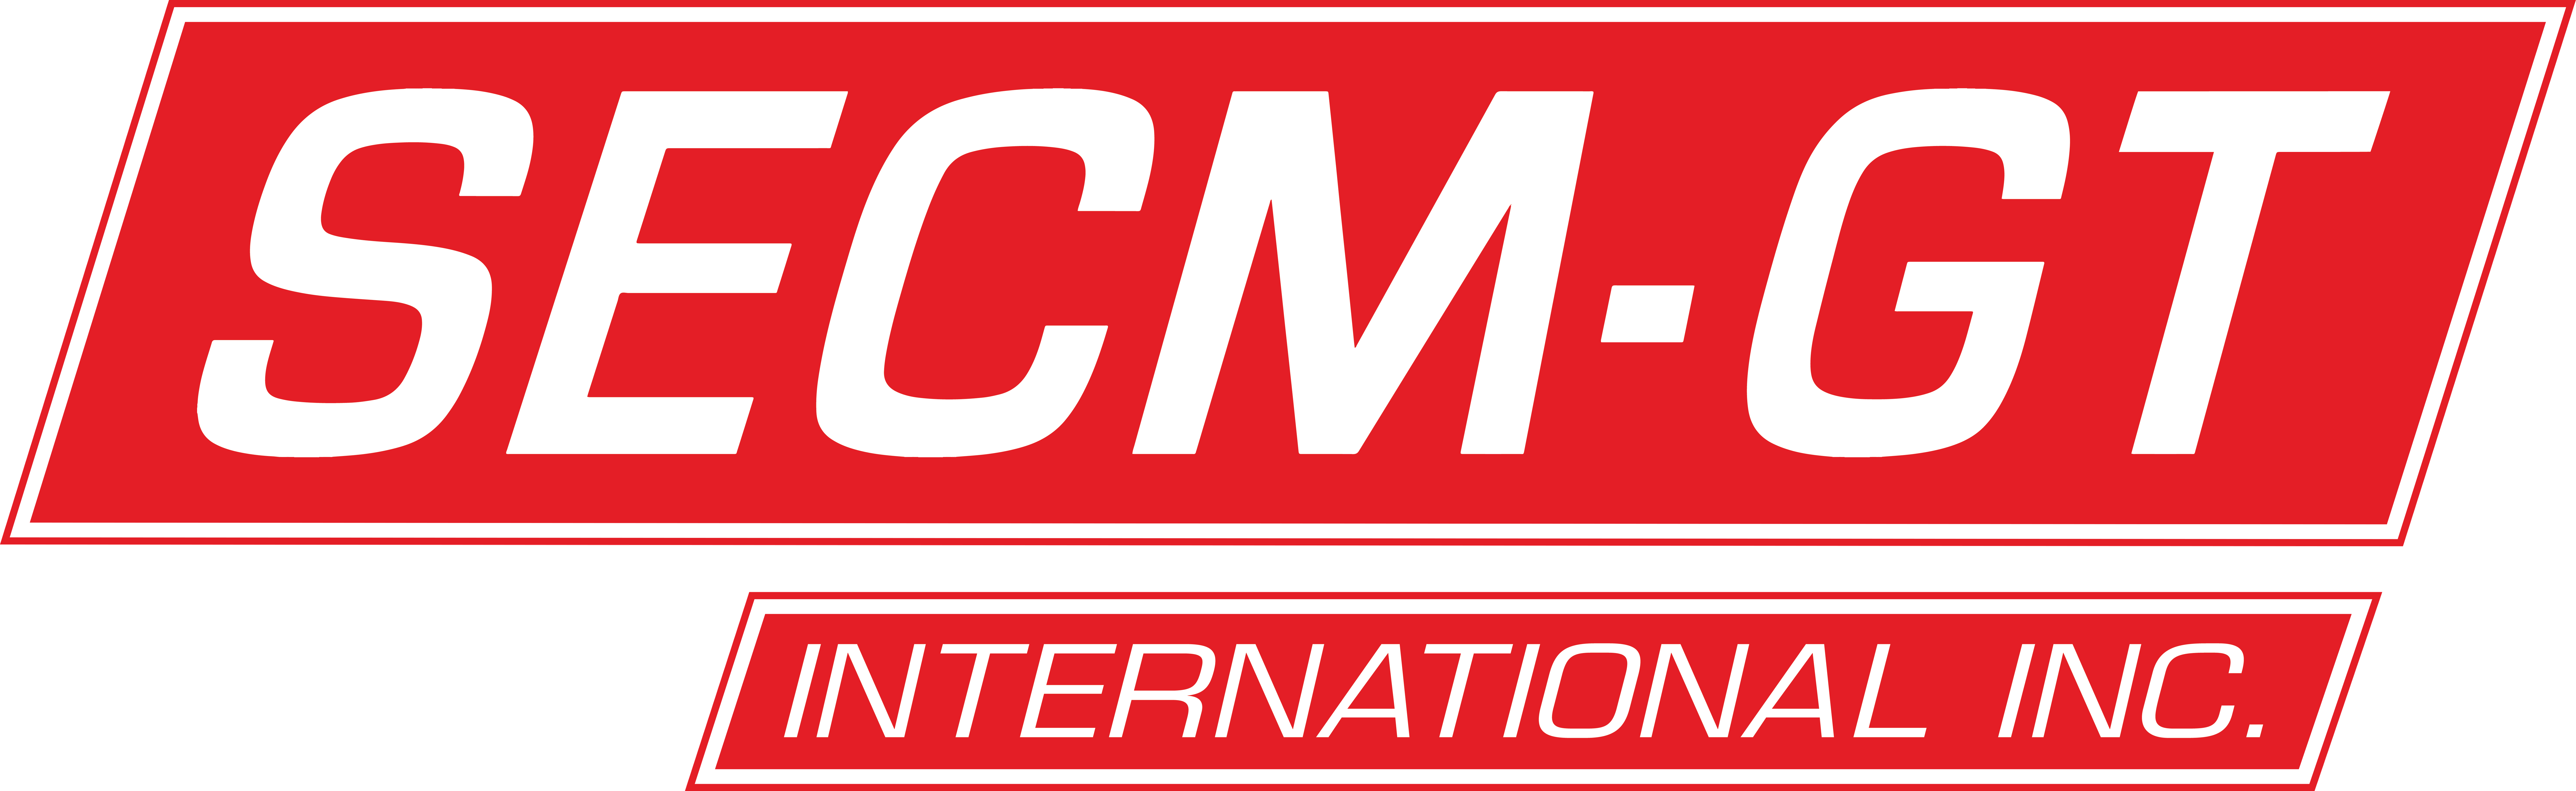 Logo SECM-GT International